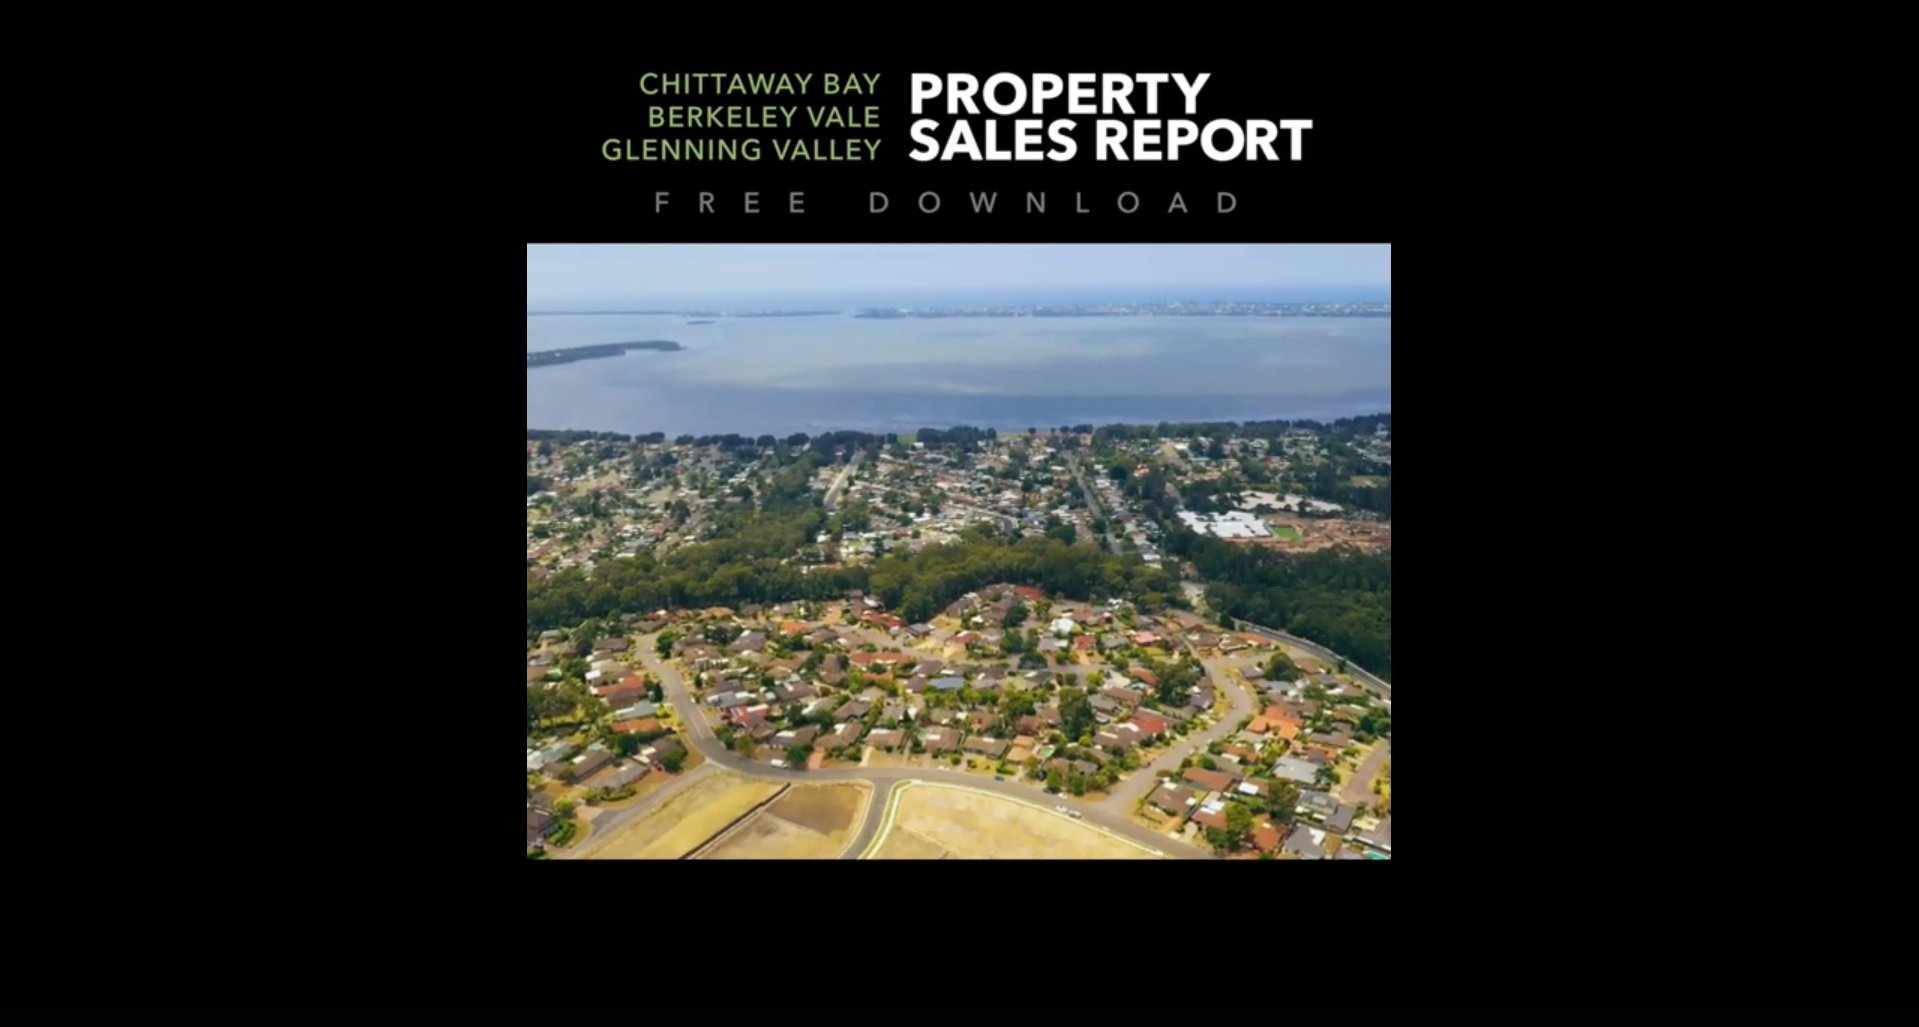 Chittaway Bay, Berkeley Vale & Glenning Valley Residential Sales Report Spring 2019